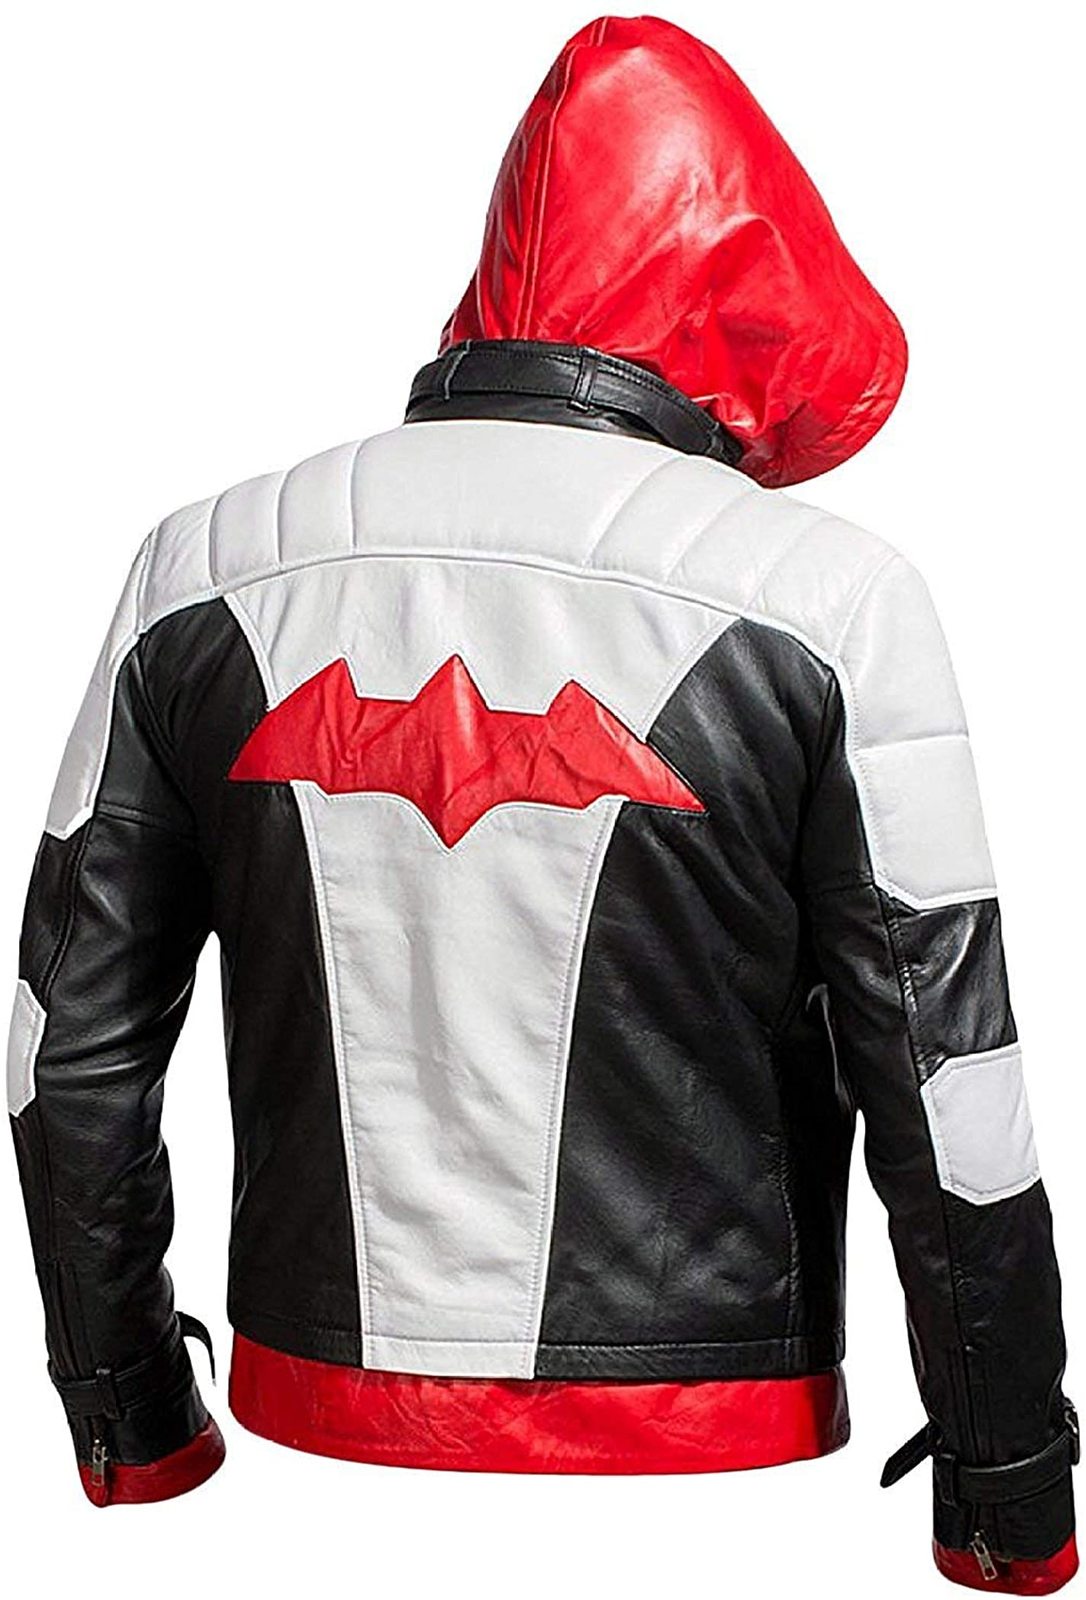 Batman Arkham Knight Red Hooded Jason Todd Cosplay Costume Leather Biker Jacket